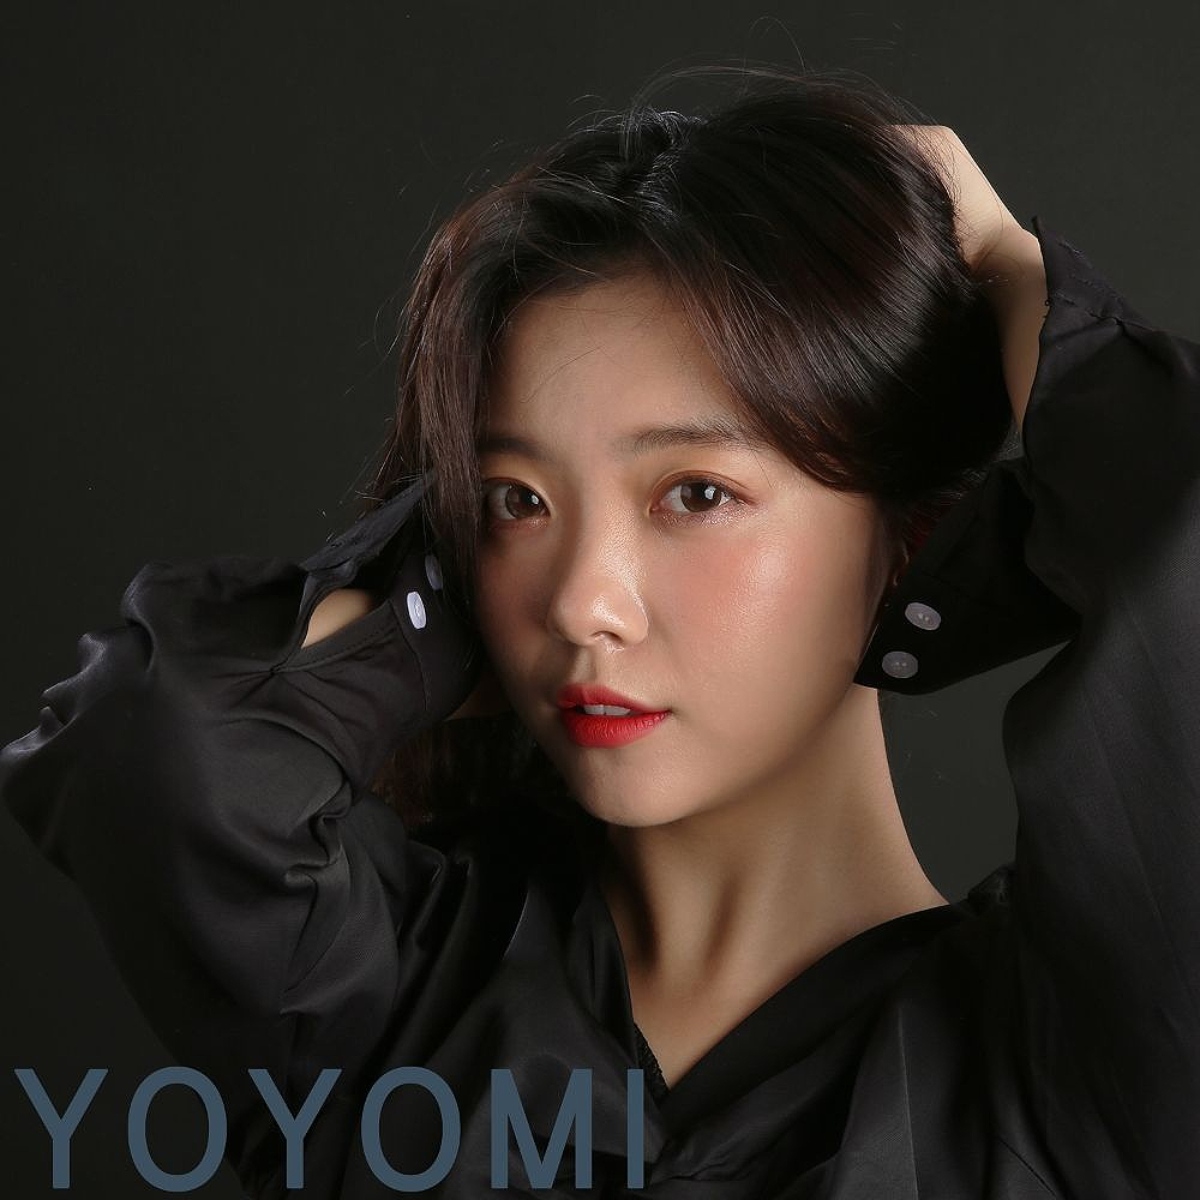 Певица Yoyomi